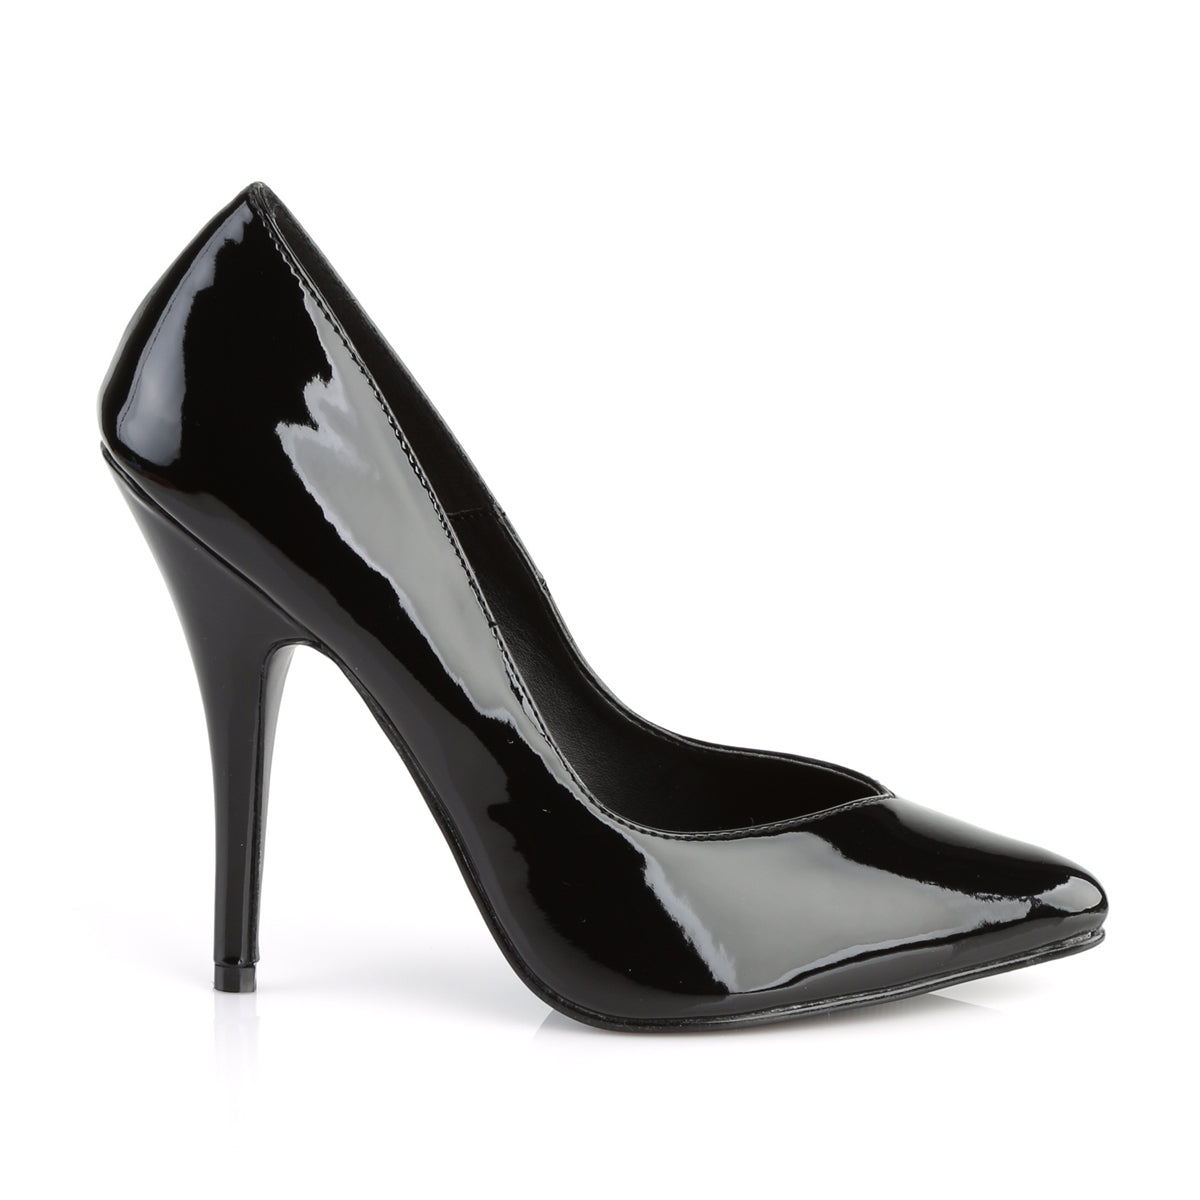 SEDUCE-420V Sexy Shoes 5" Heel Black Patent Fetish Footwear-Pleaser- Sexy Shoes Fetish Heels